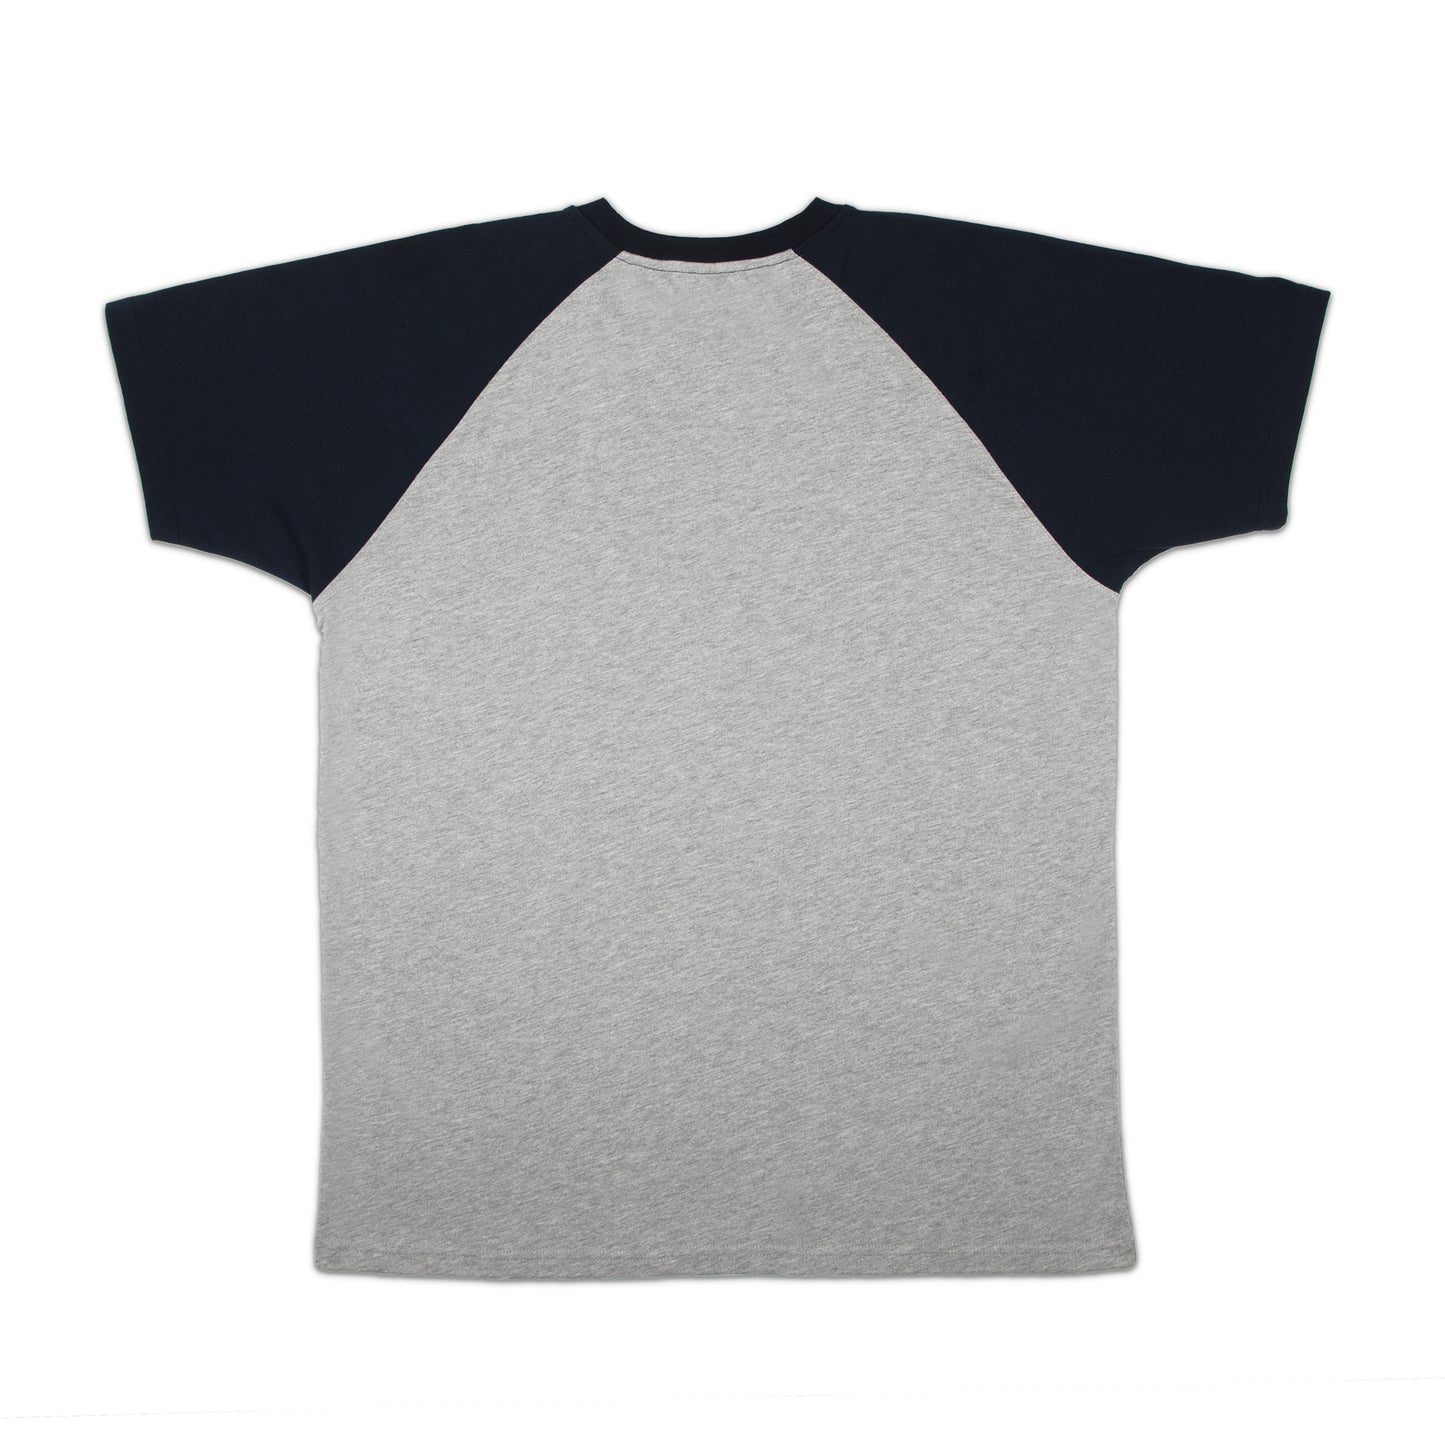 Kids' Stamford Hovercorps T-Shirt - Grey/Navy